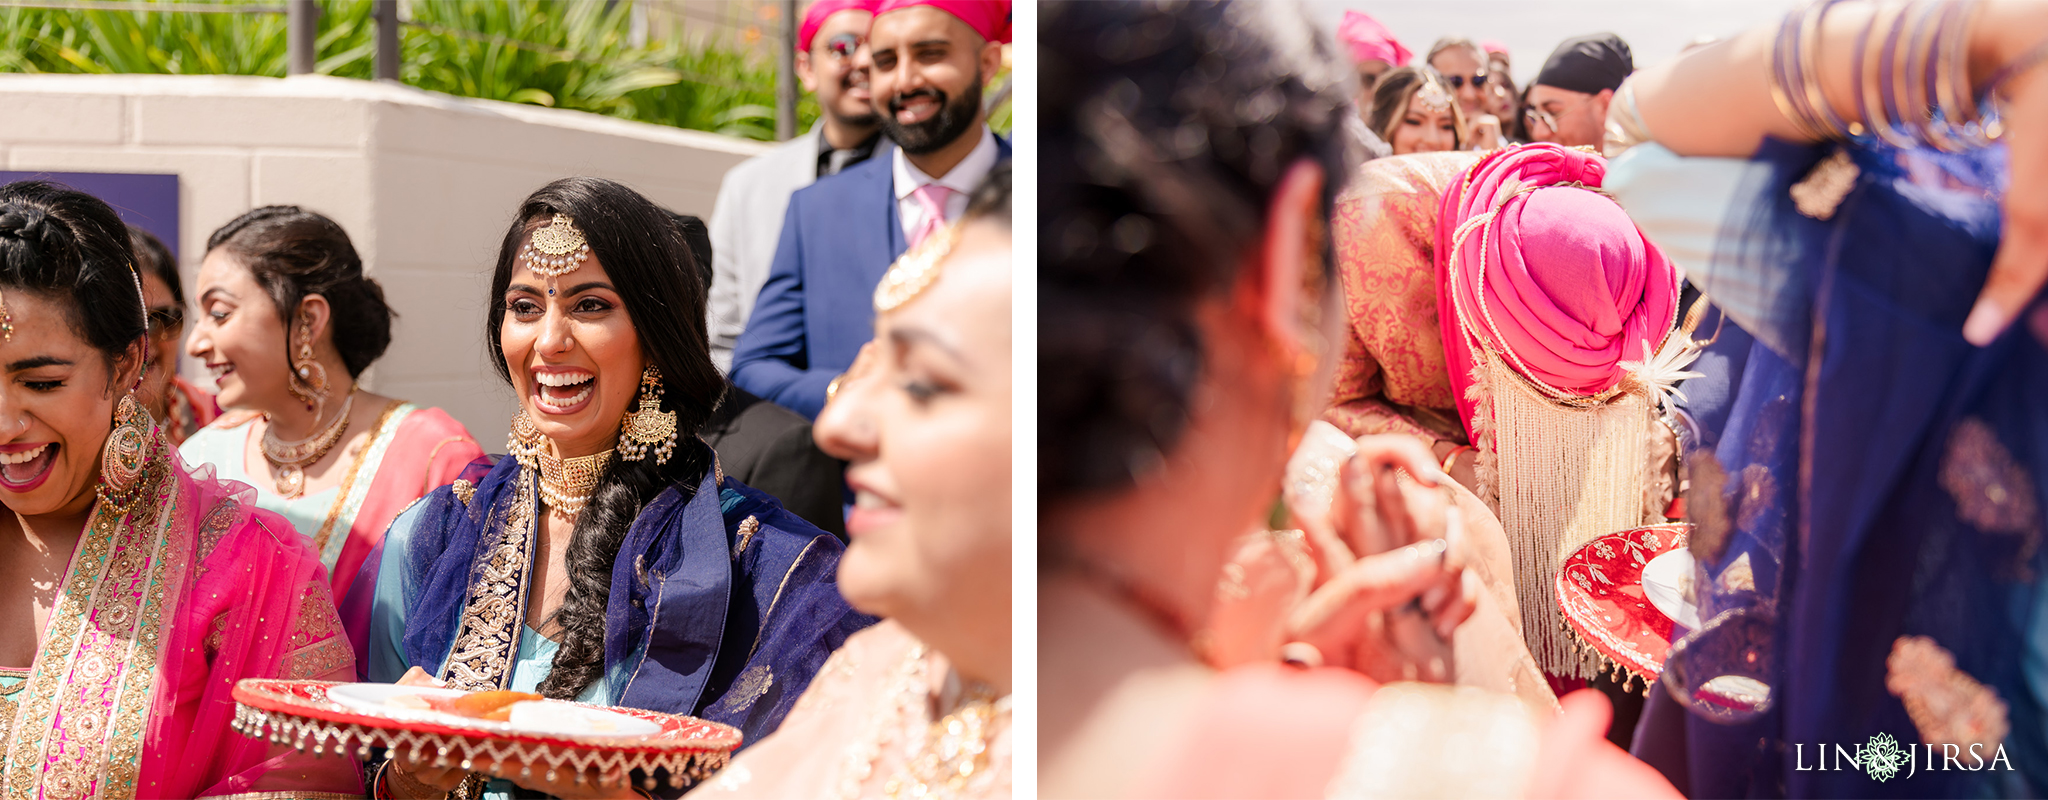 11 Coronado Resort and Spa San Diego Punjabi Wedding Photography